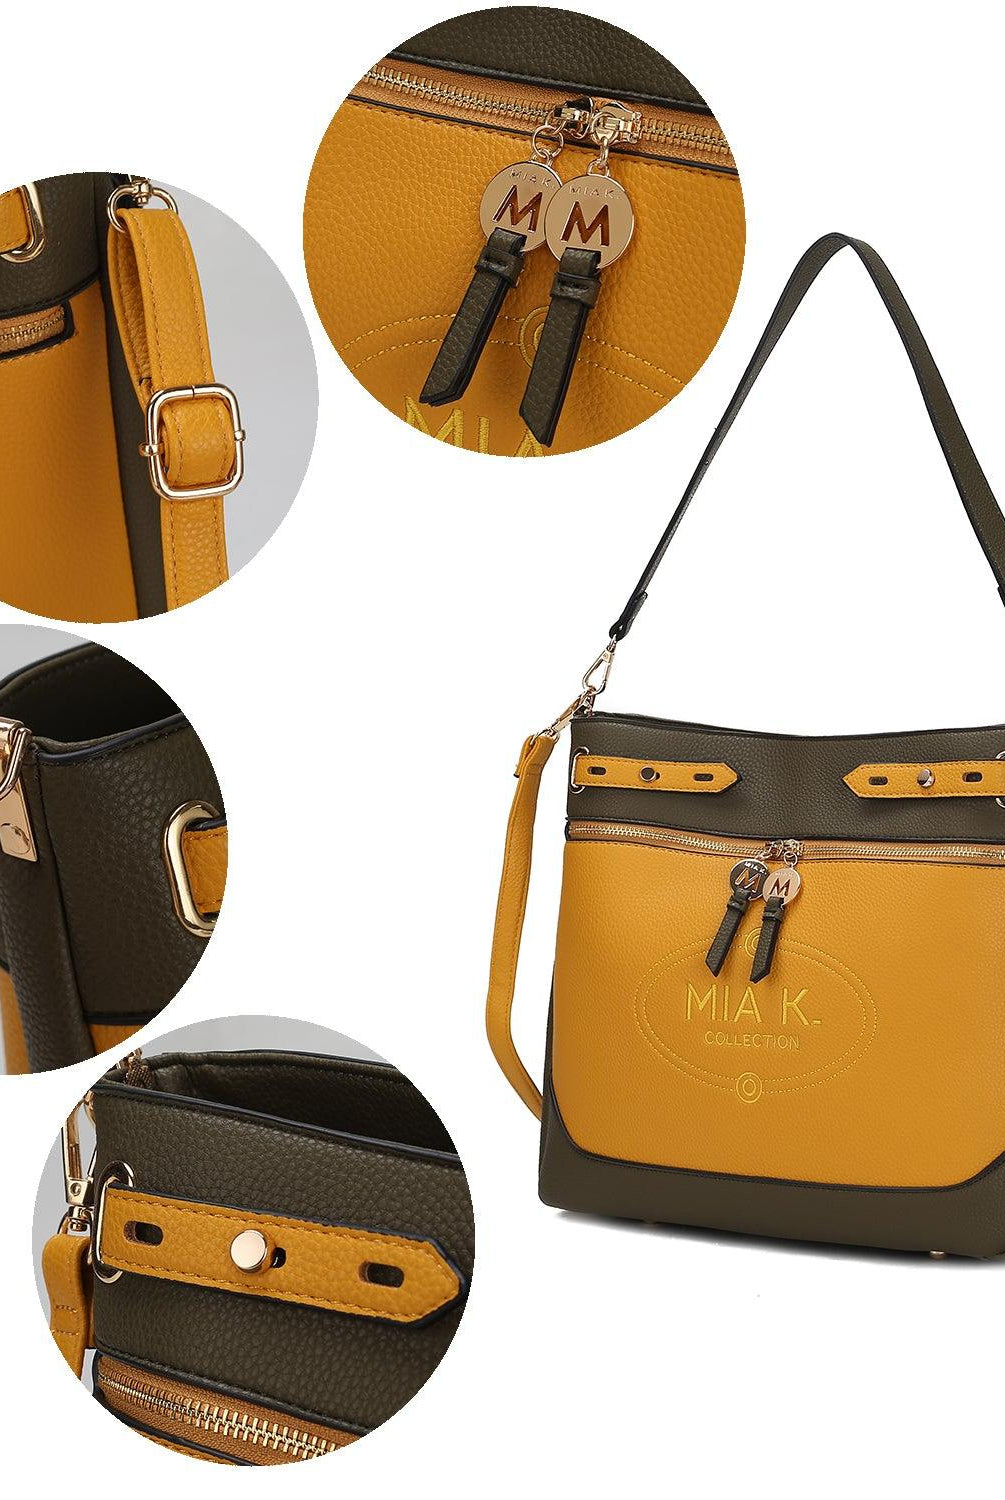 Wallets, Handbags & Accessories Evie Two Tone Vegan Leather Women Shoulder Bag